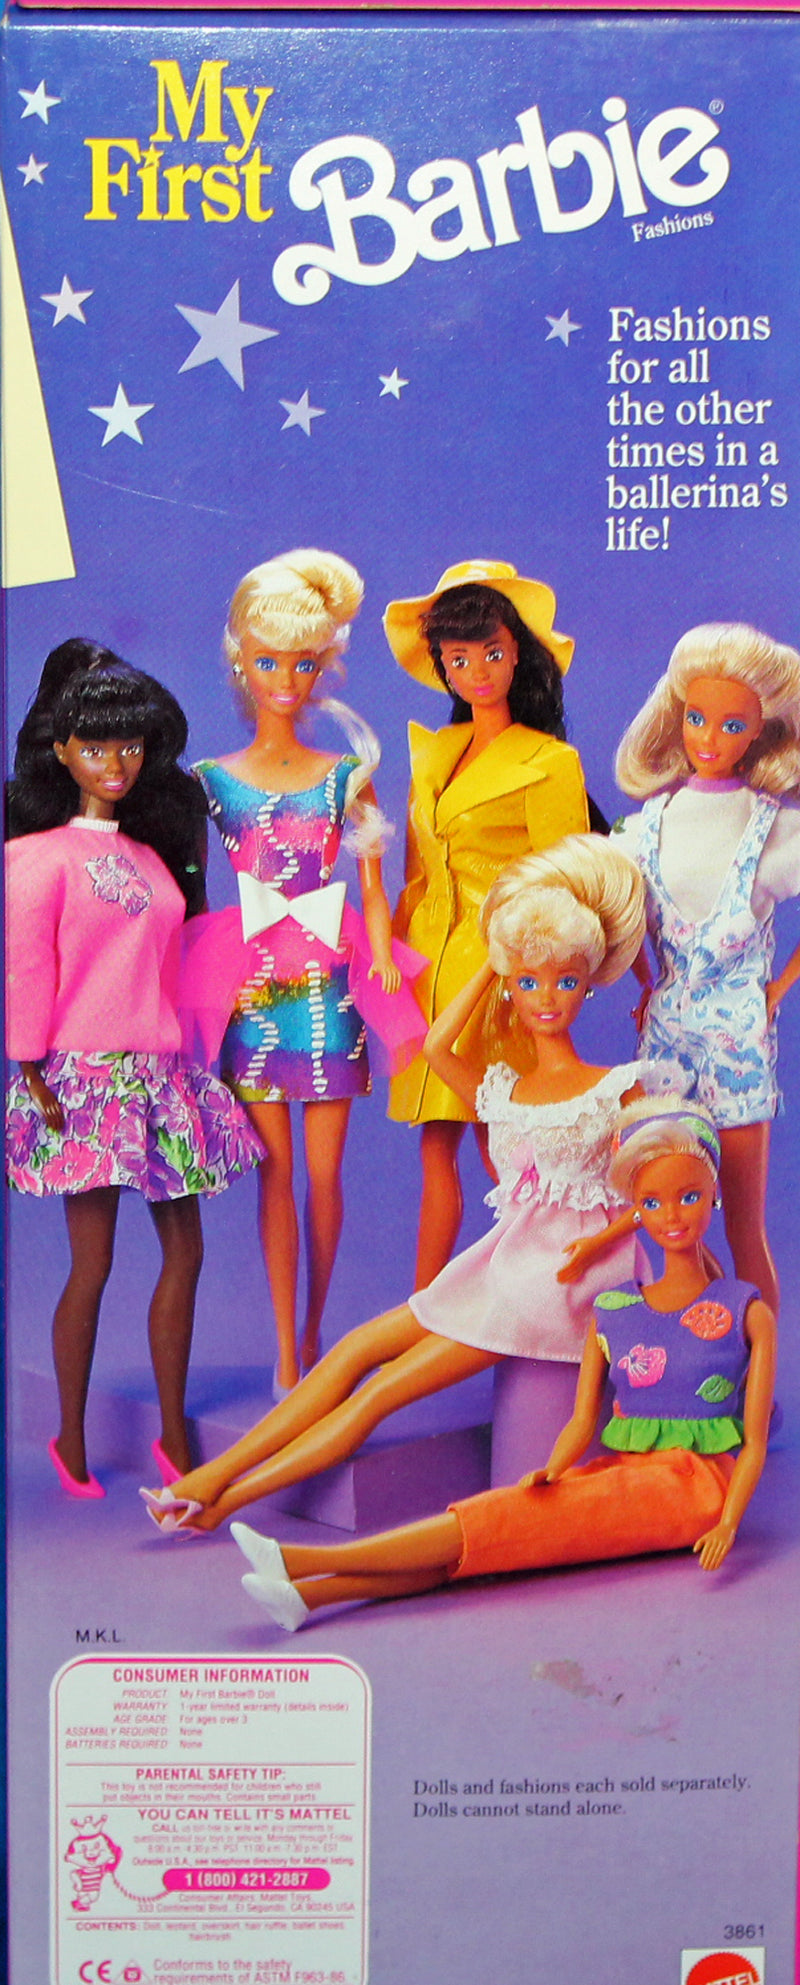 1991 My First Barbie Glittering Ballerina Barbie (3861) - African American